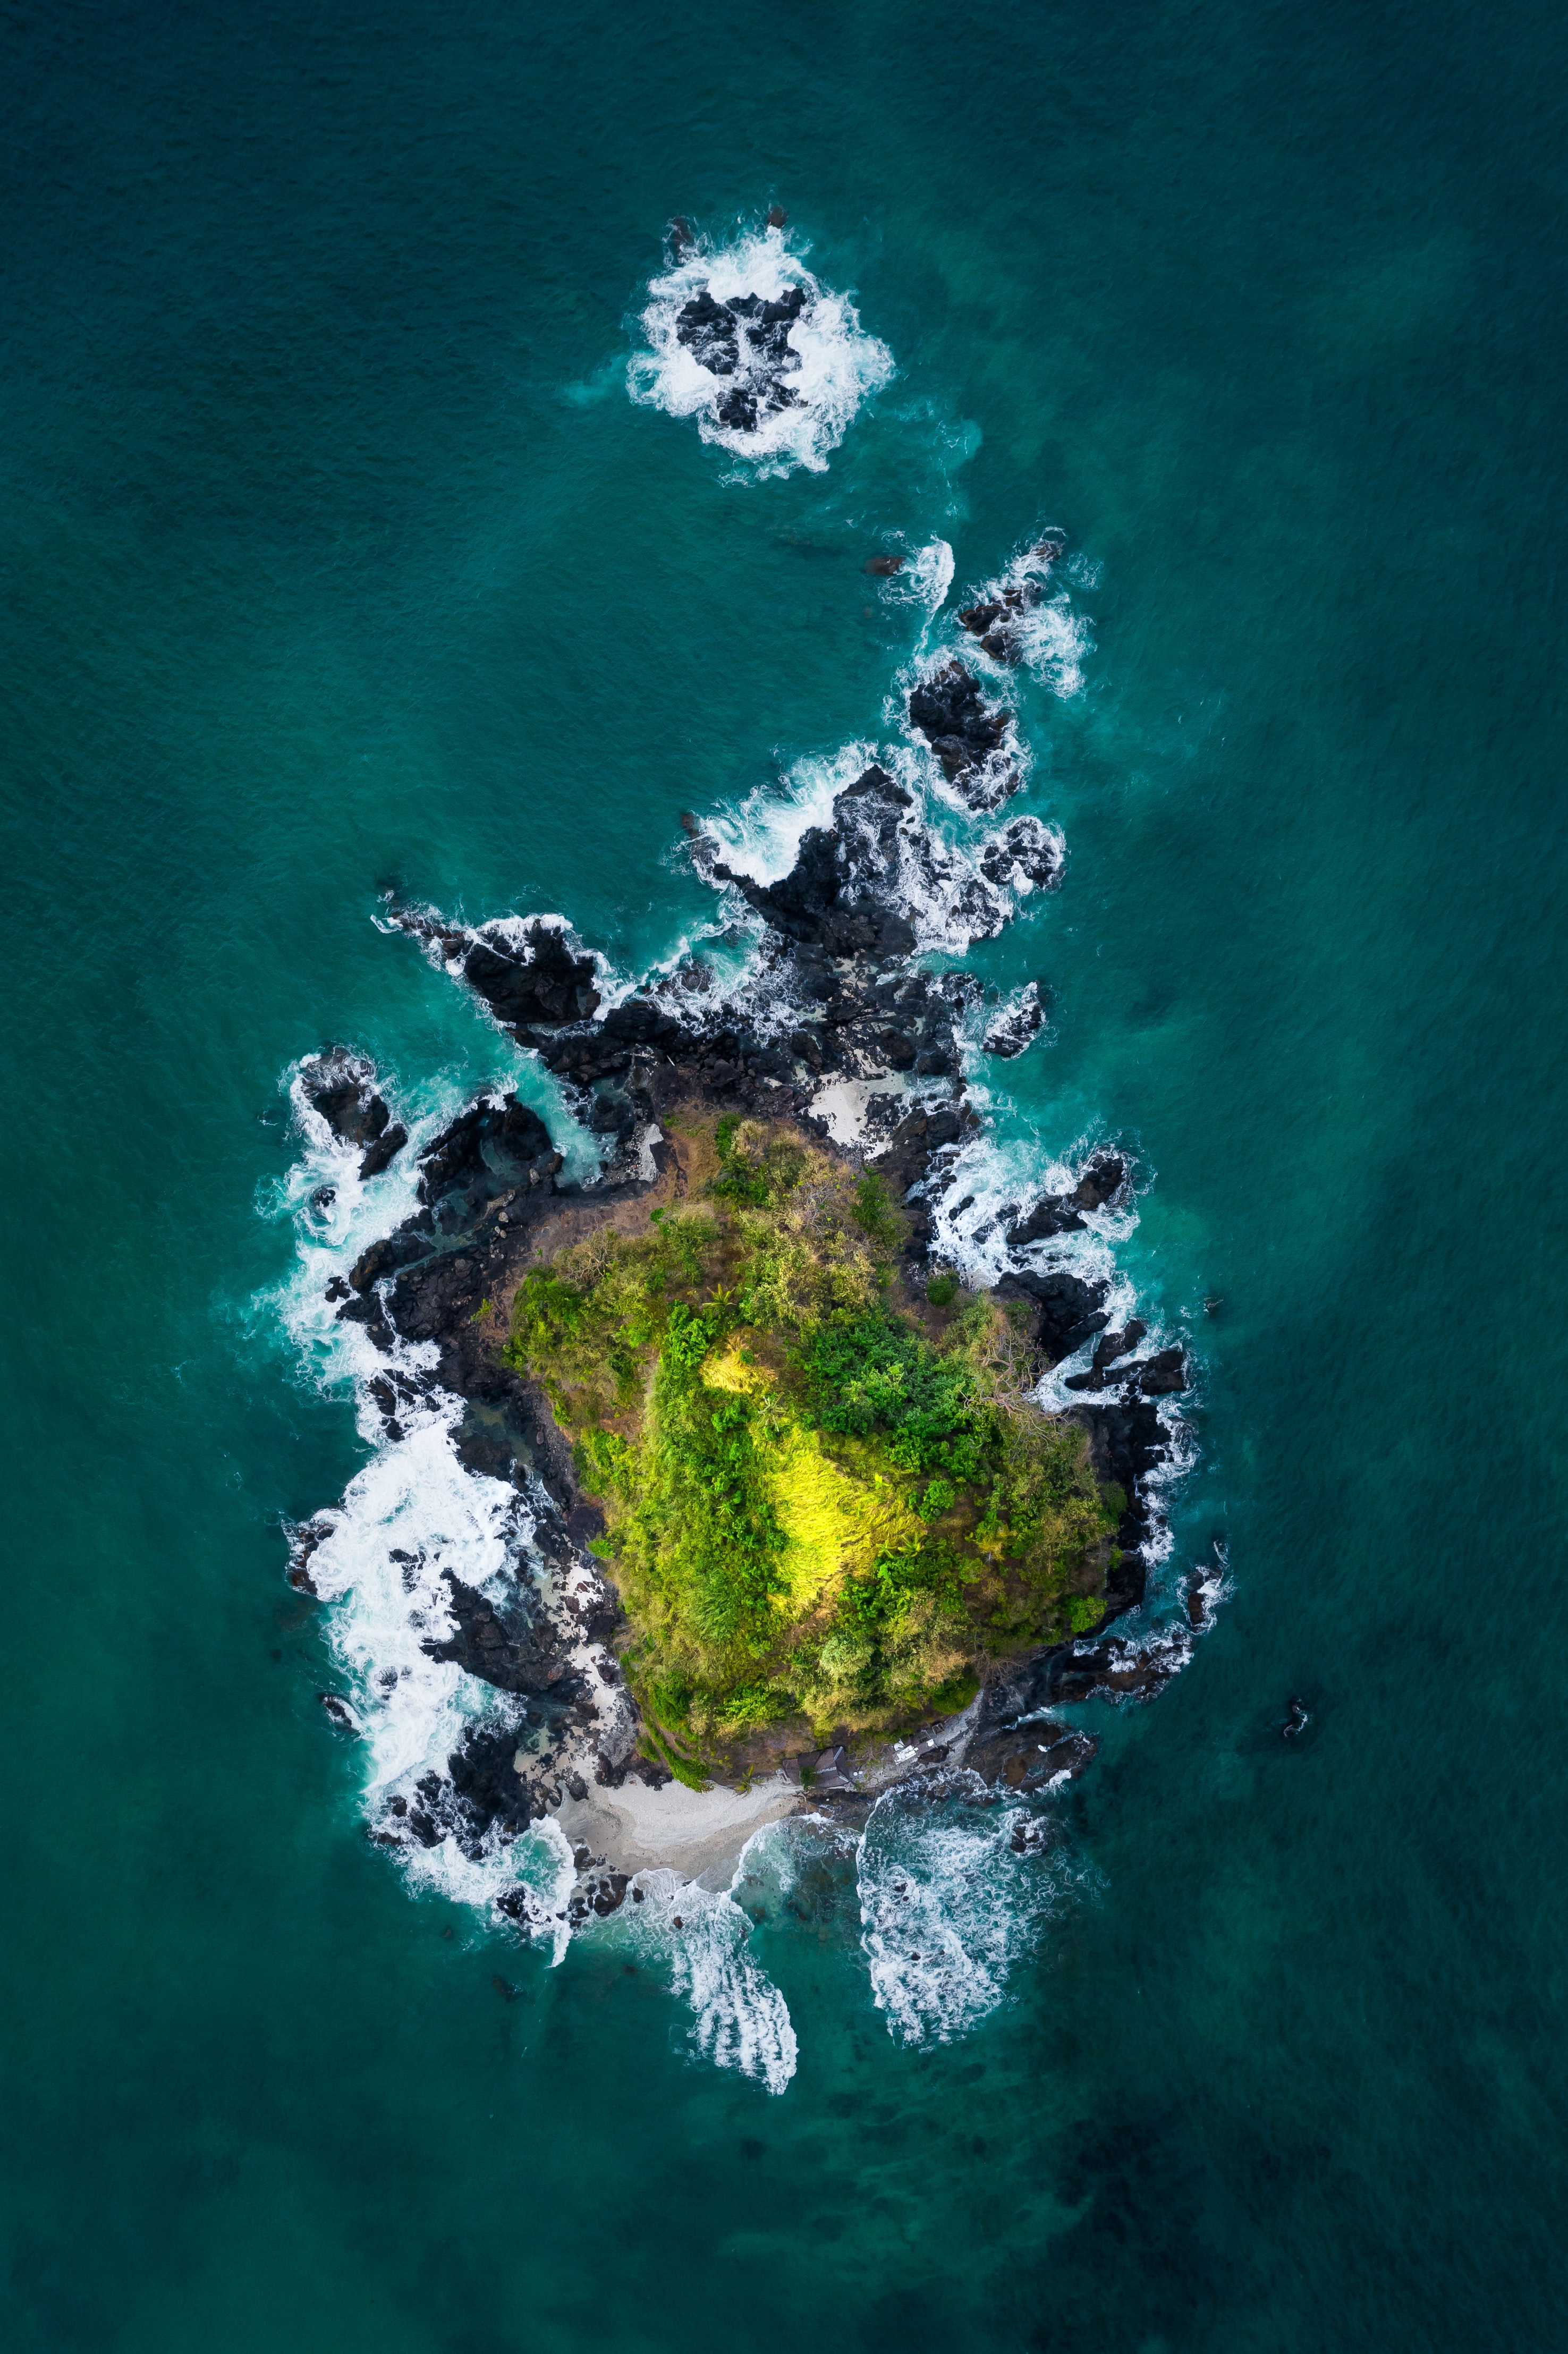 134037 descargar imagen naturaleza, ondas, vista desde arriba, costa, isla: fondos de pantalla y protectores de pantalla gratis